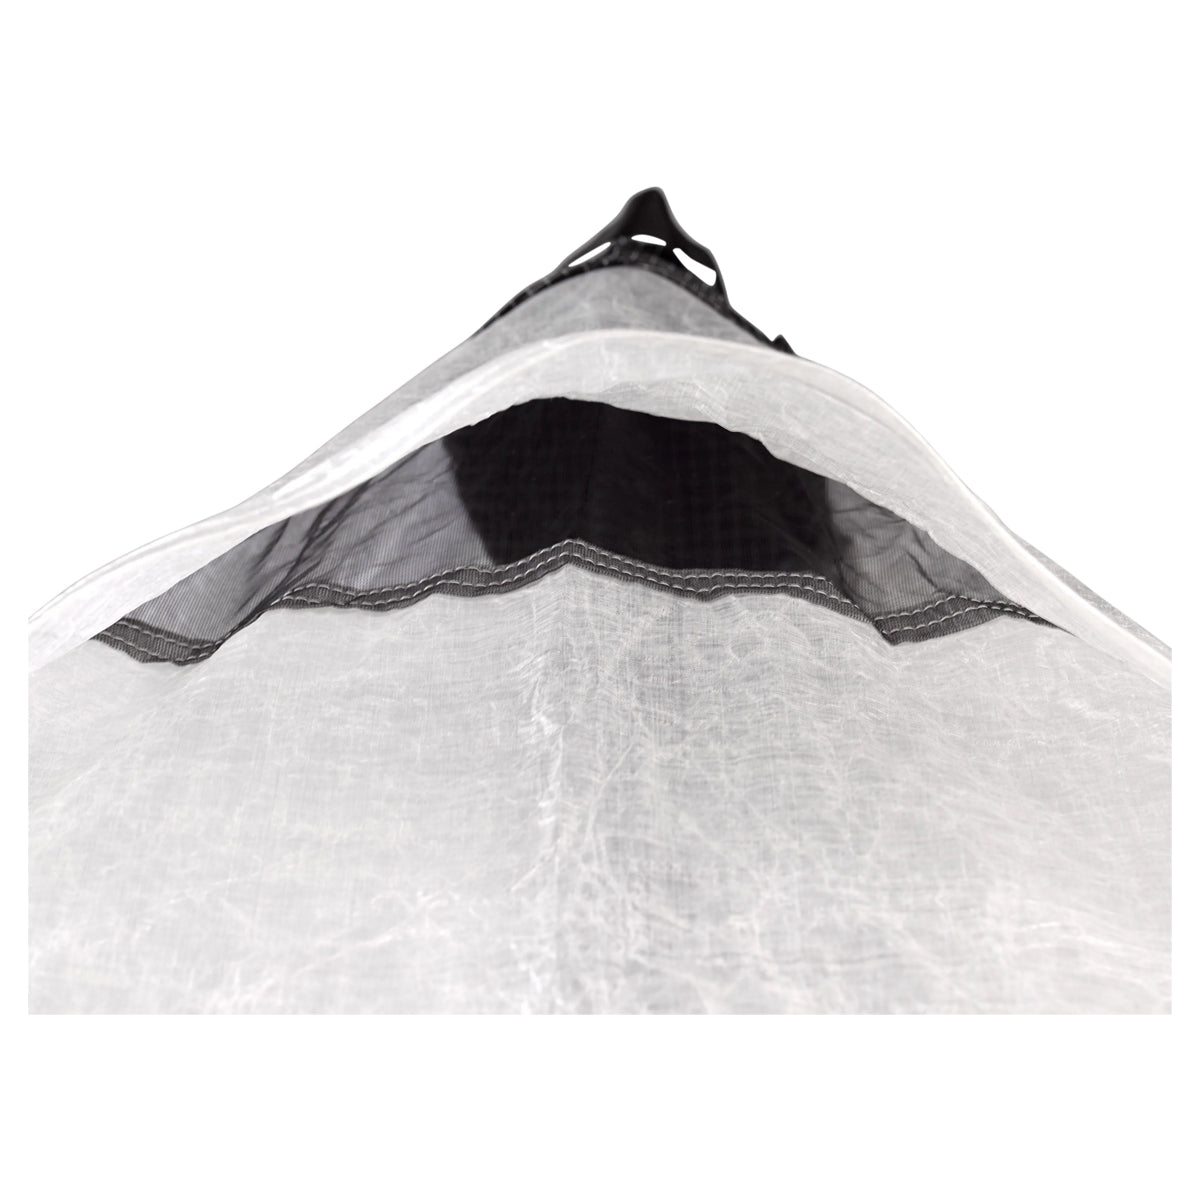 Hyperlite Mountain Gear UltaMid 4 - Ultralight Pyramid Tent in  by GOHUNT | Hyperlite Mountain Gear - GOHUNT Shop